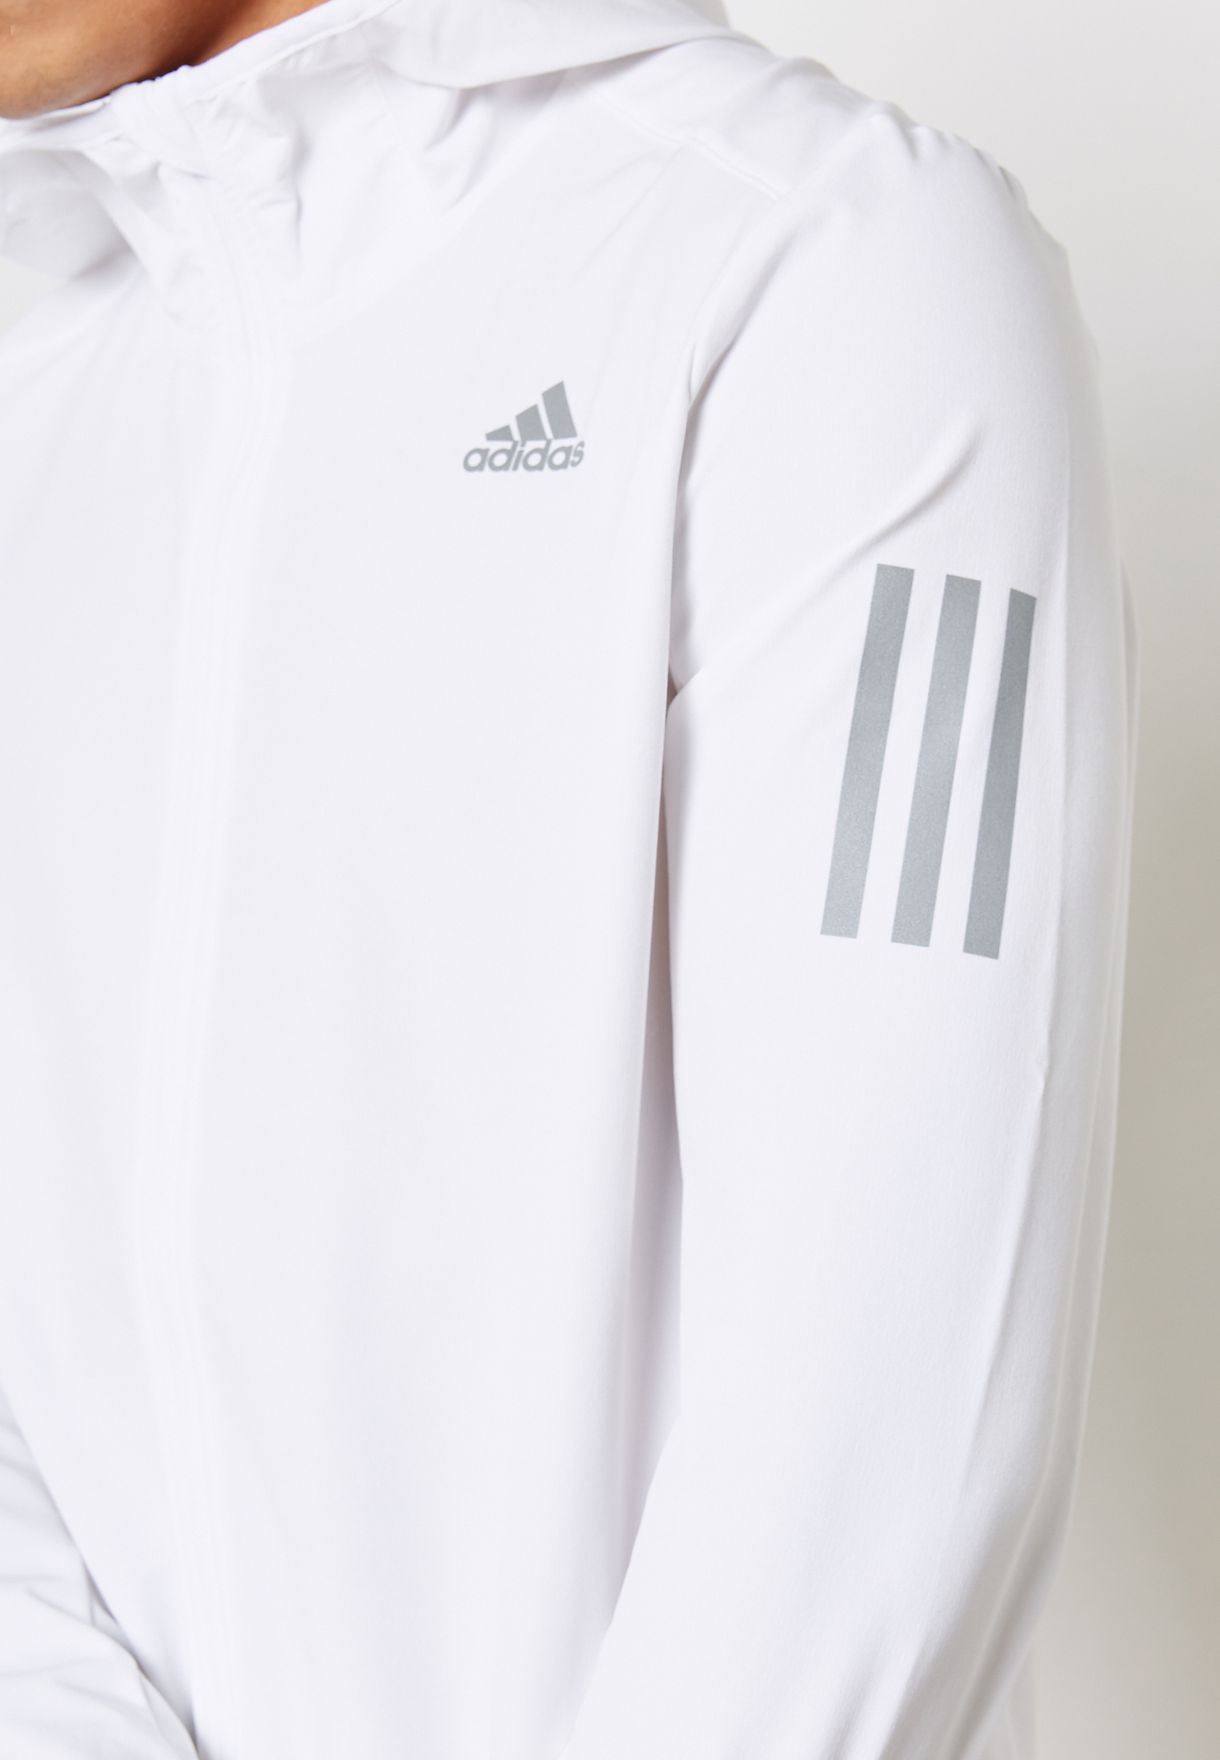 adidas jacket with reflective stripes